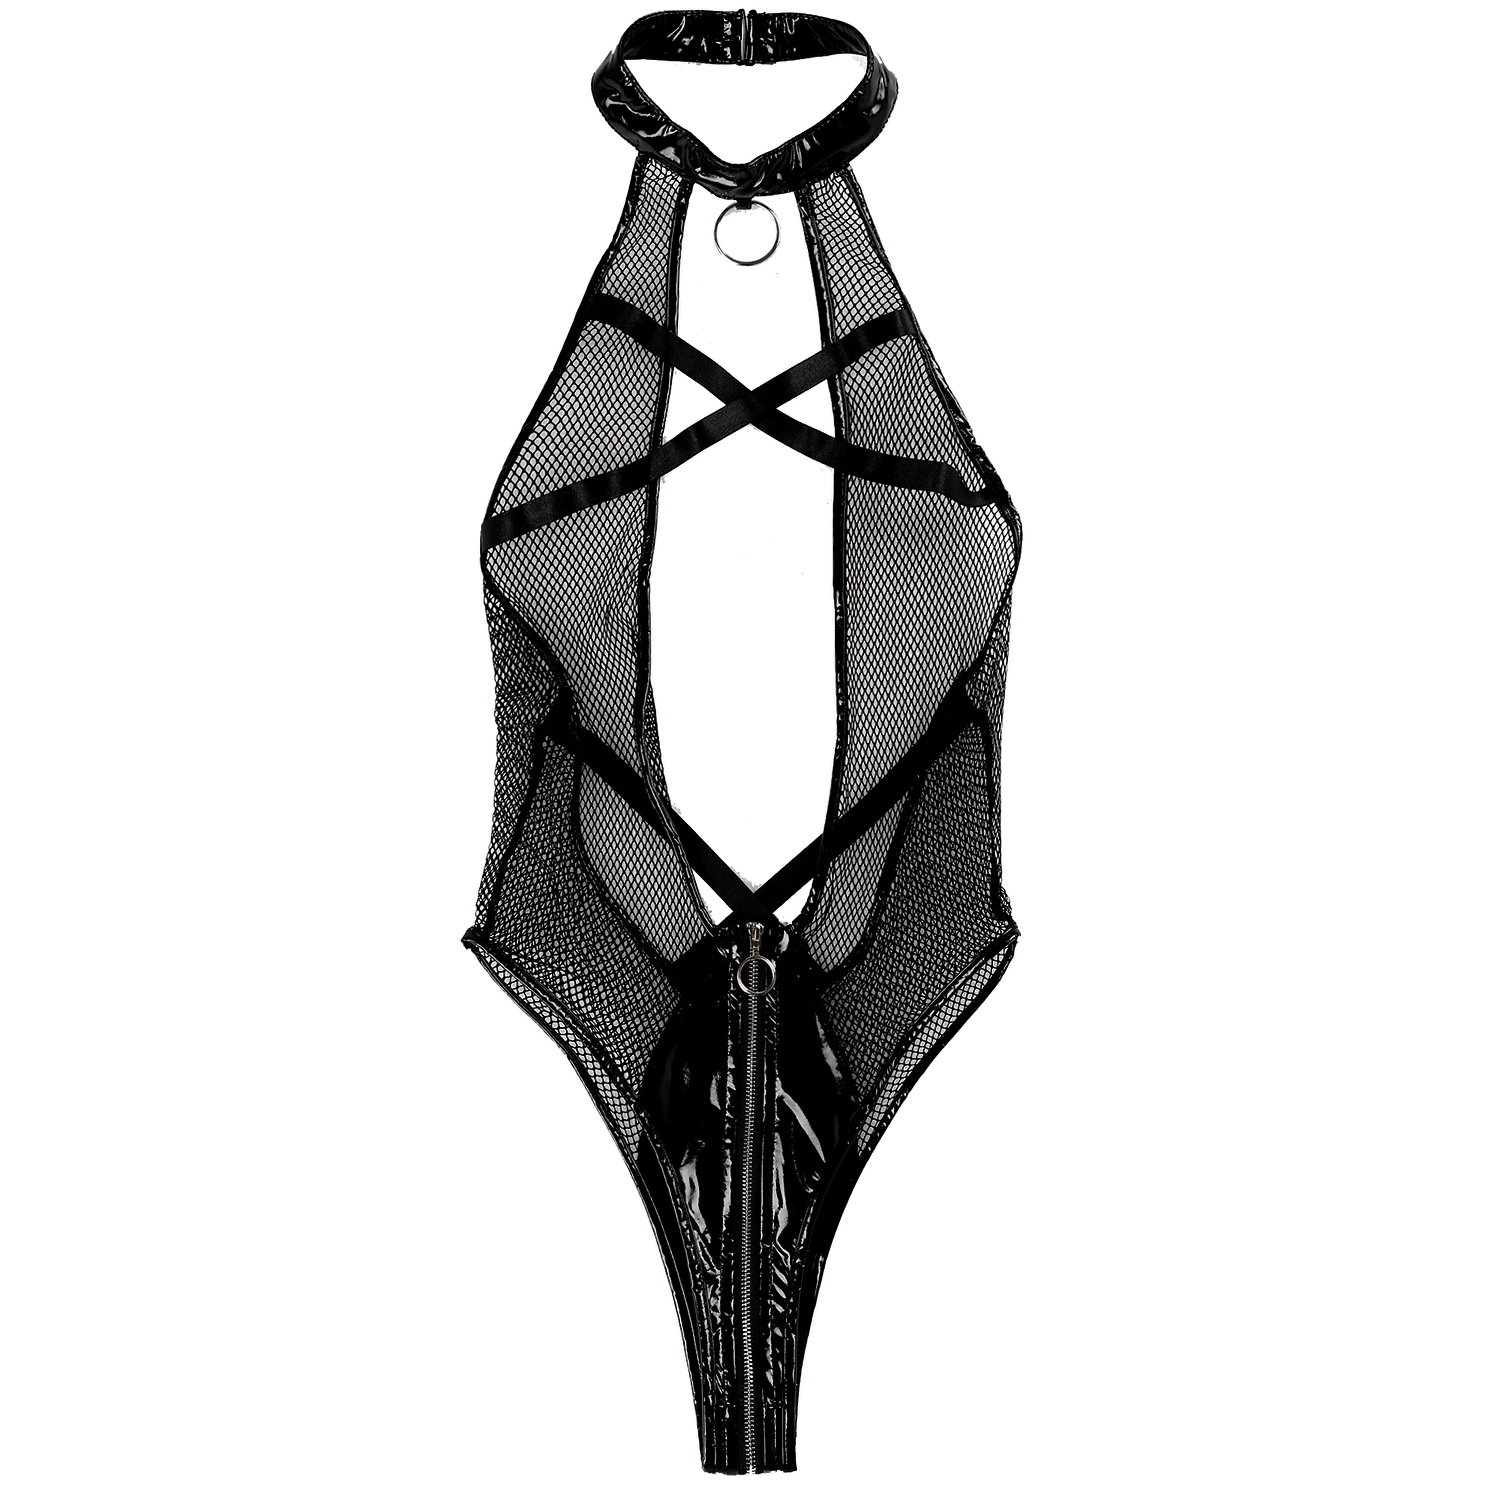 Women's Wet Look Mesh Bodysuit / Halter Neck Sexy Lingerie / Black Patent Leather Strappy Underwear - HARD'N'HEAVY